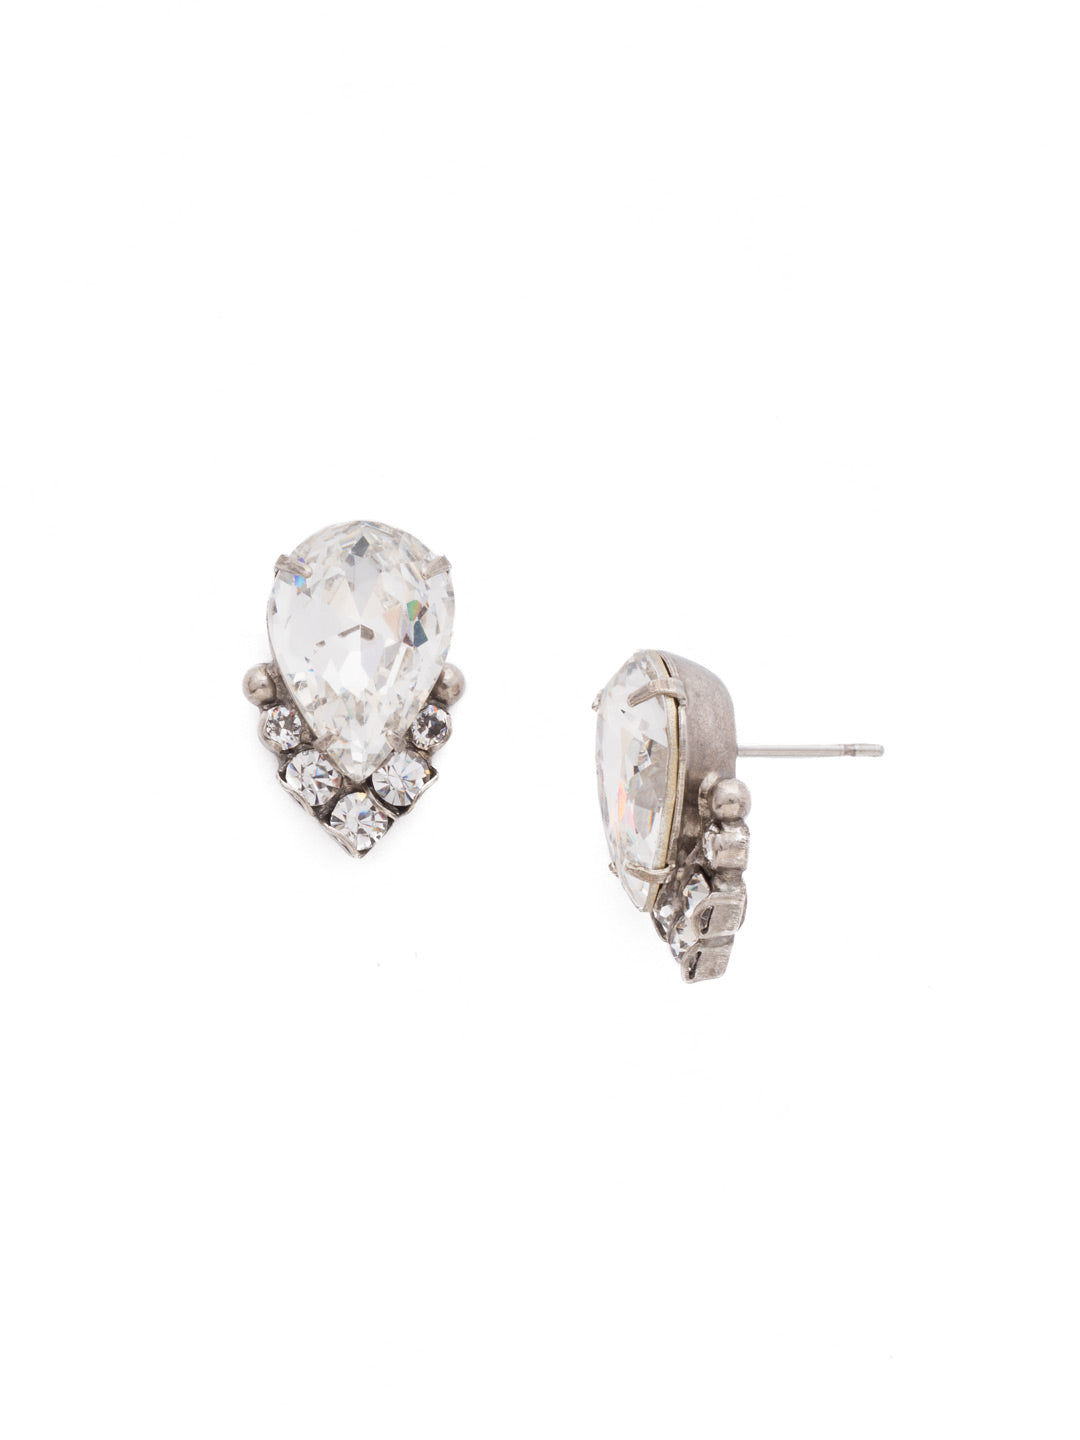 Product Image: Crystal Teardrop and Cluster Stud Earrings